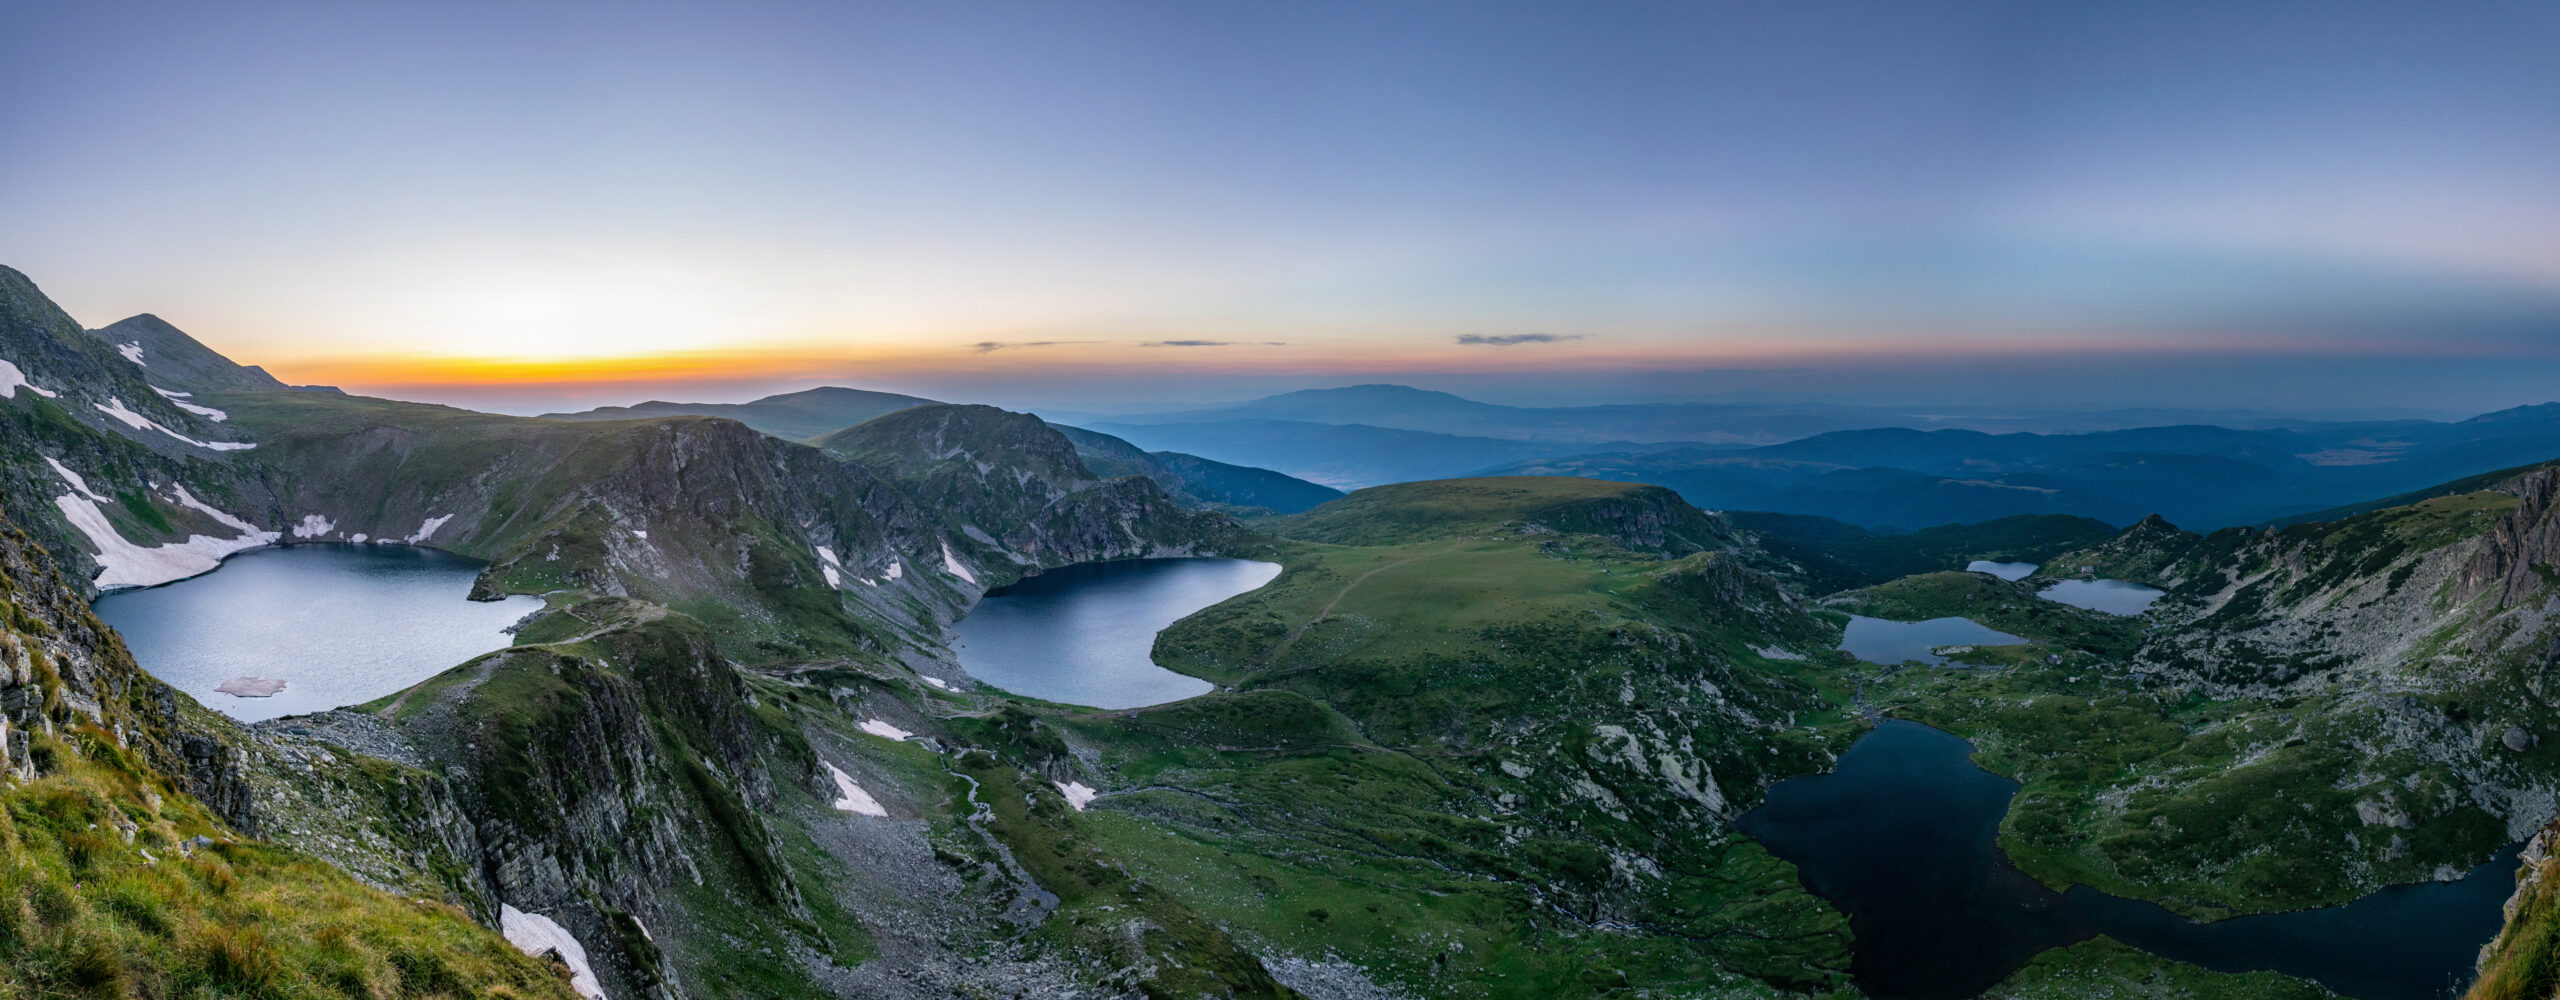 Sunrise aerial view of mountain lakes in Bulgaria.